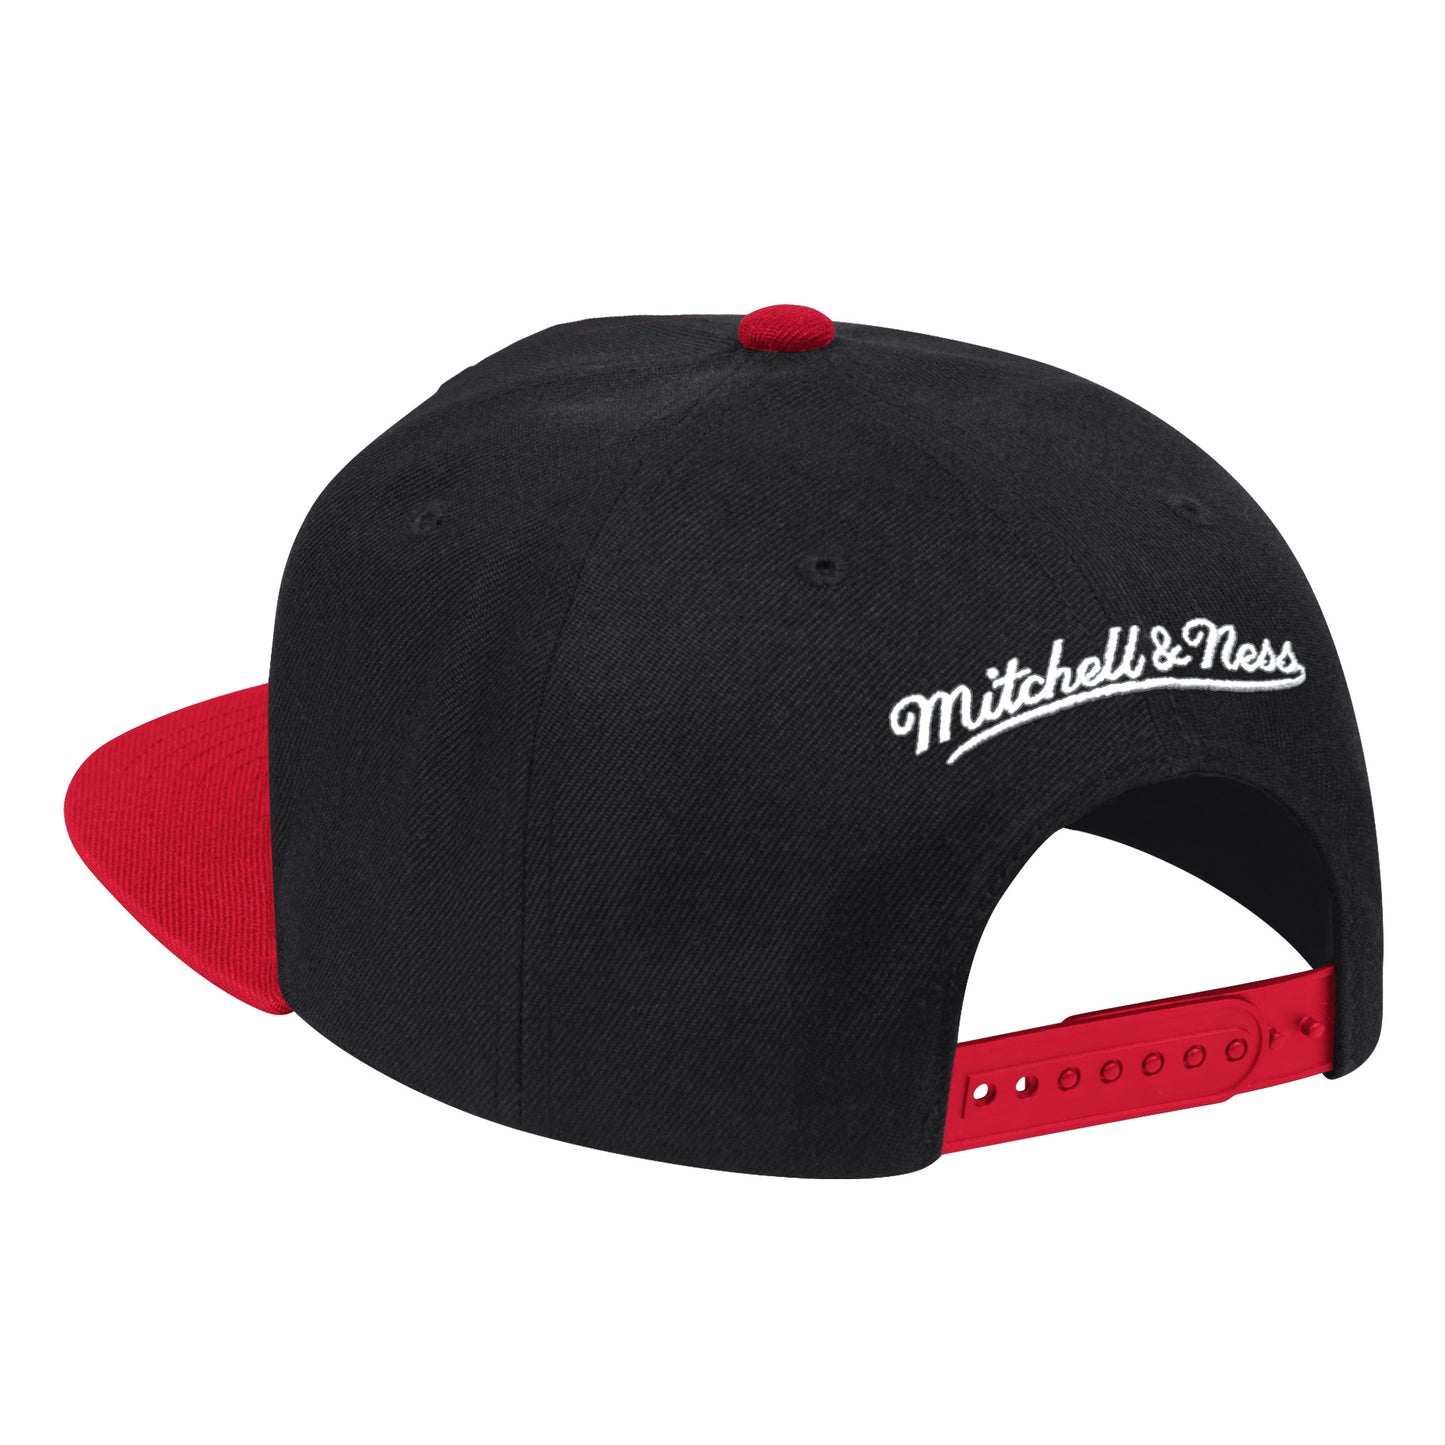 Chicago Bulls Black and Red Billboard Script Mitchell & Ness Snapback Hat